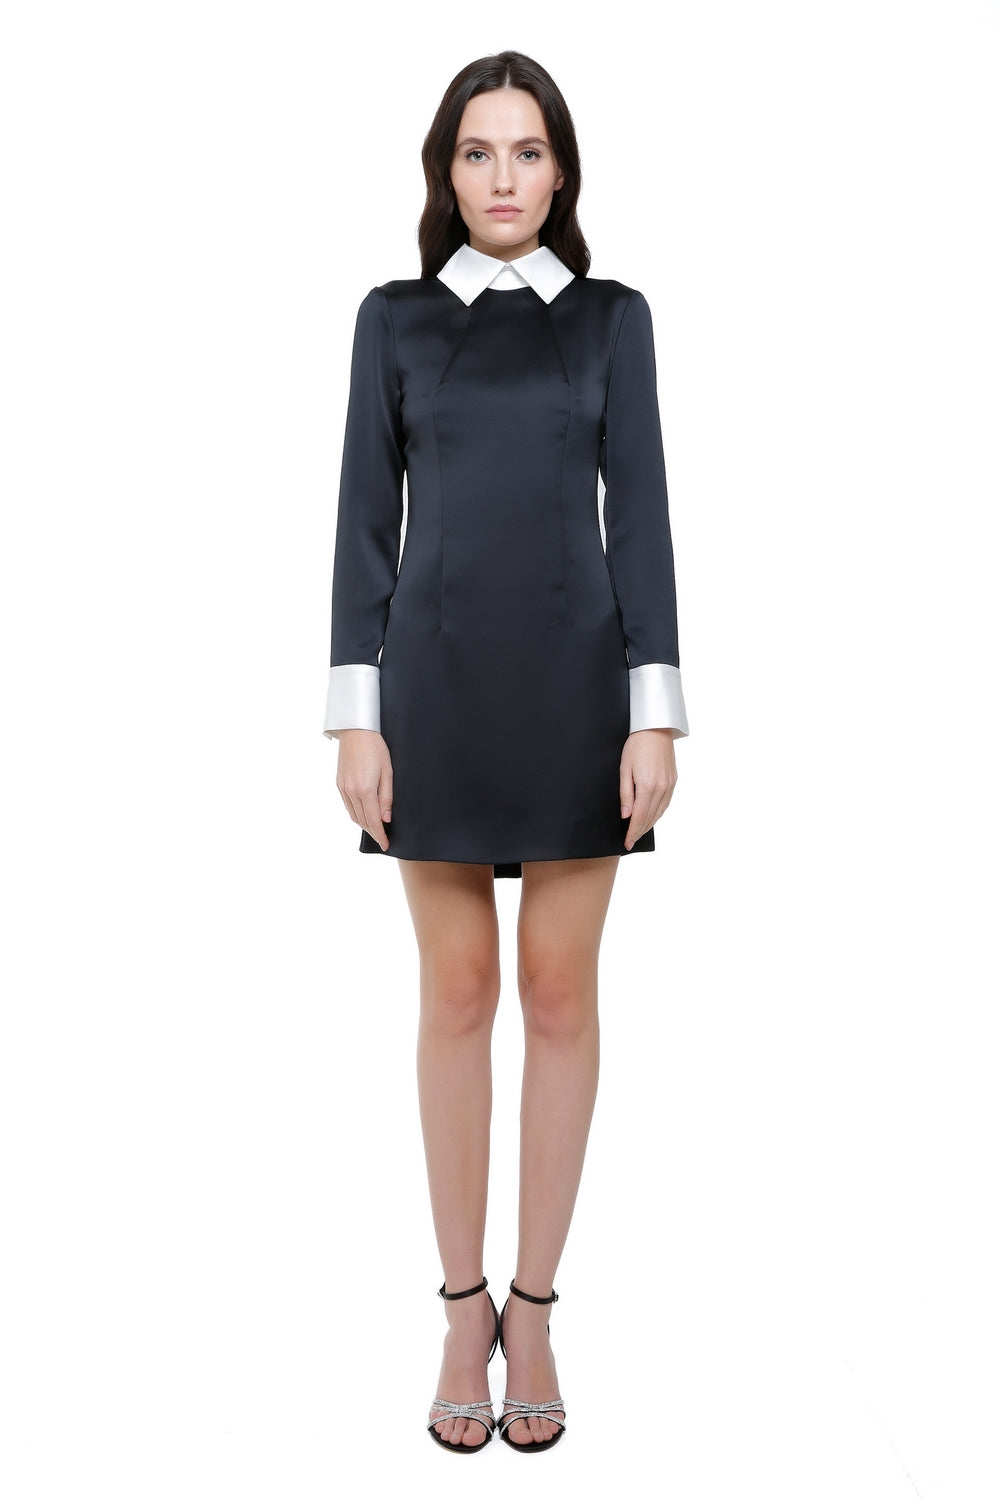 Robin Black Mini Dress With White Collar